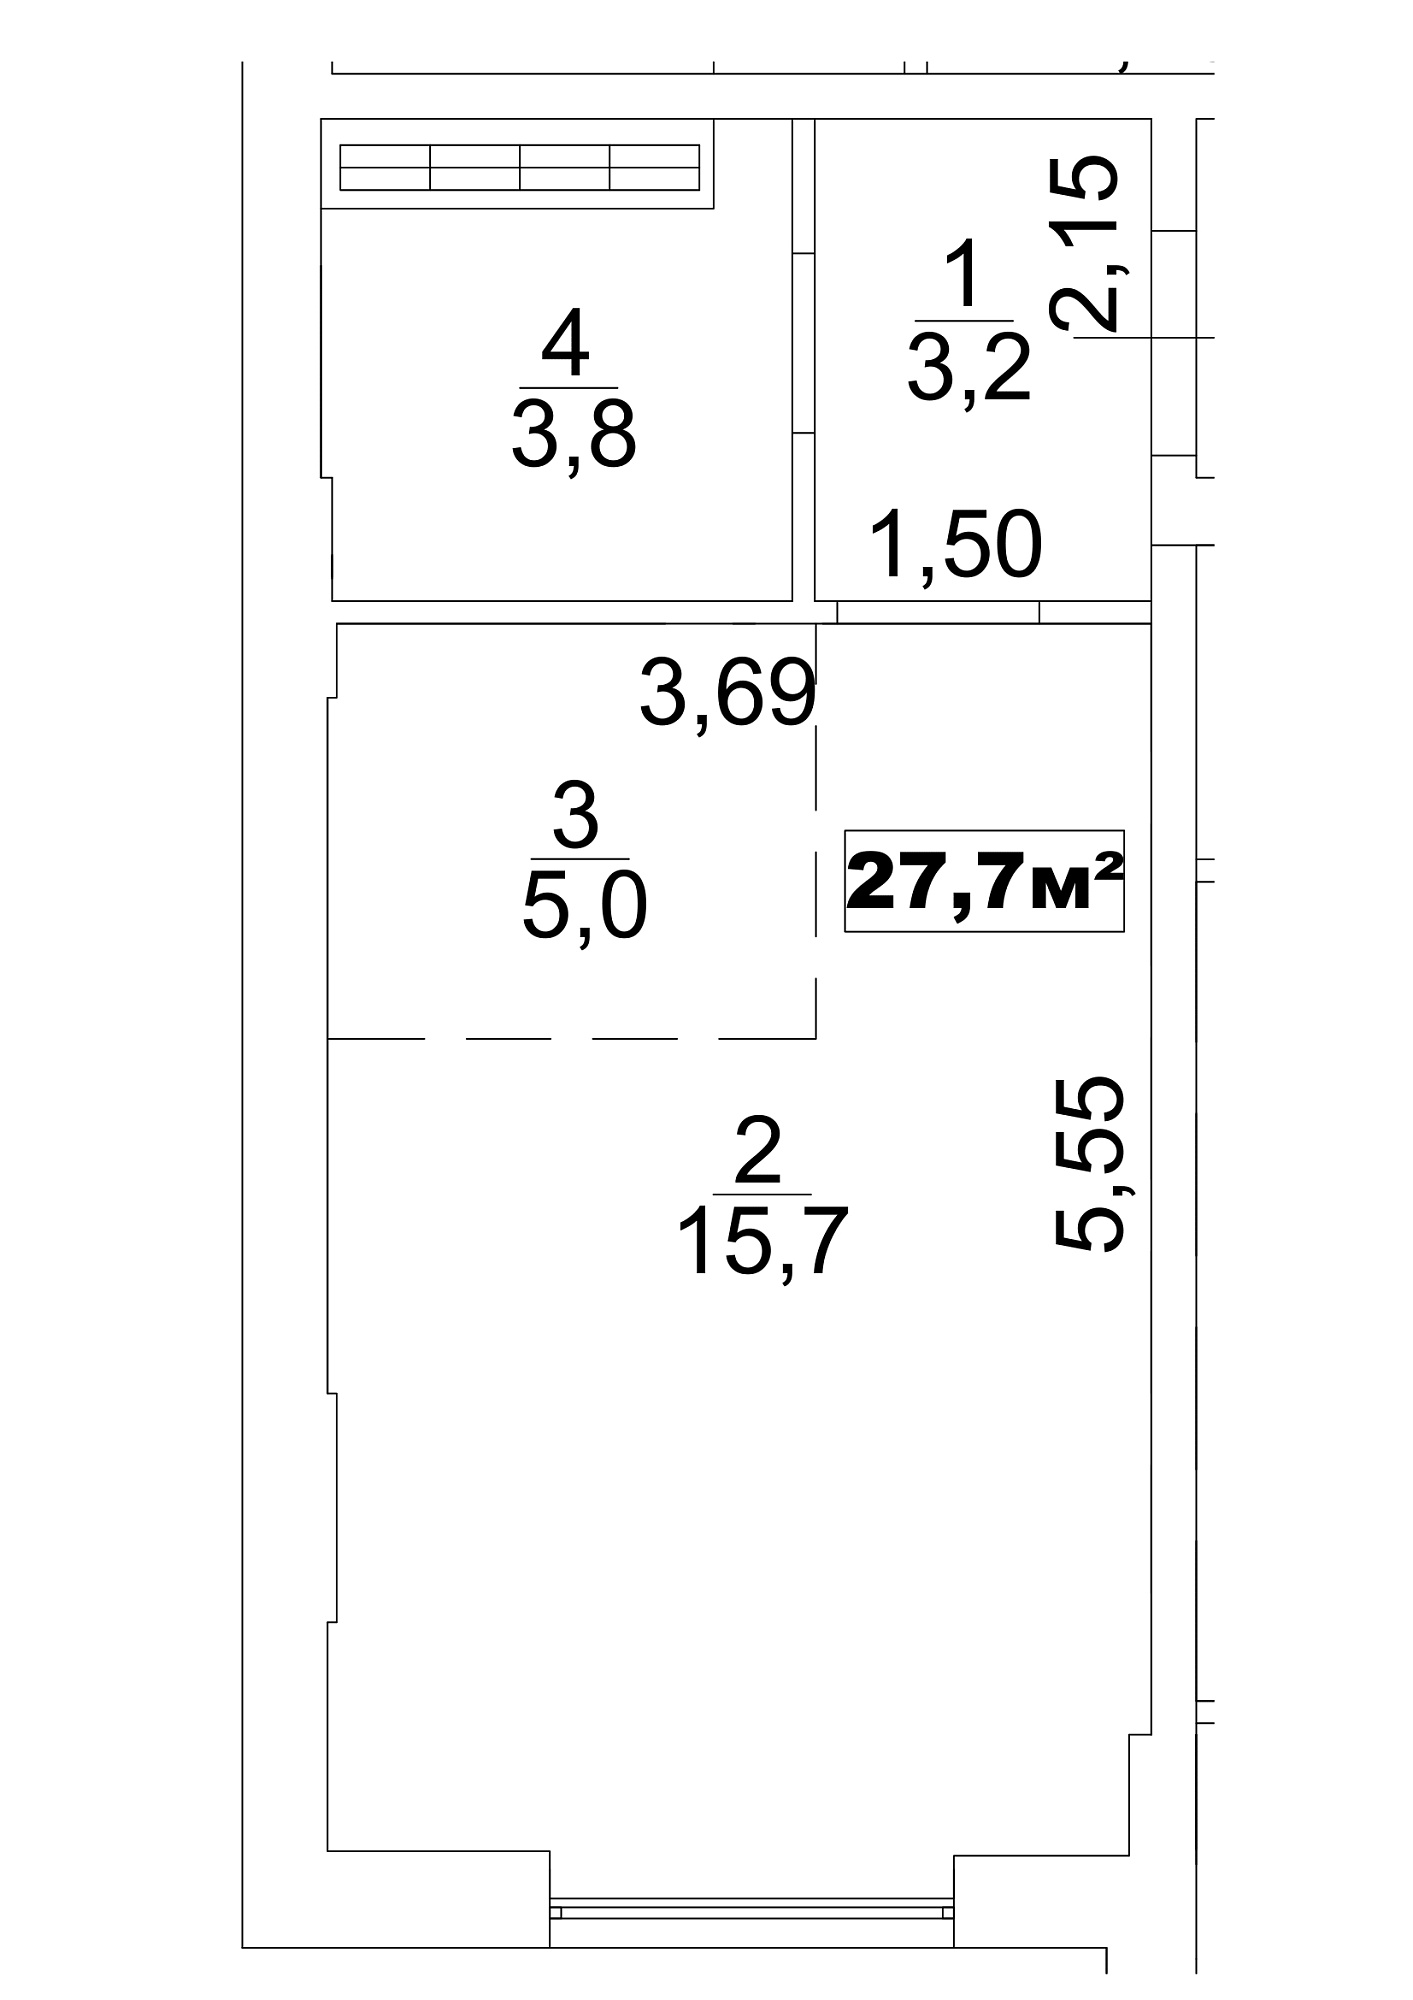 Planning Smart flats area 27.7m2, AB-13-07/0054а.